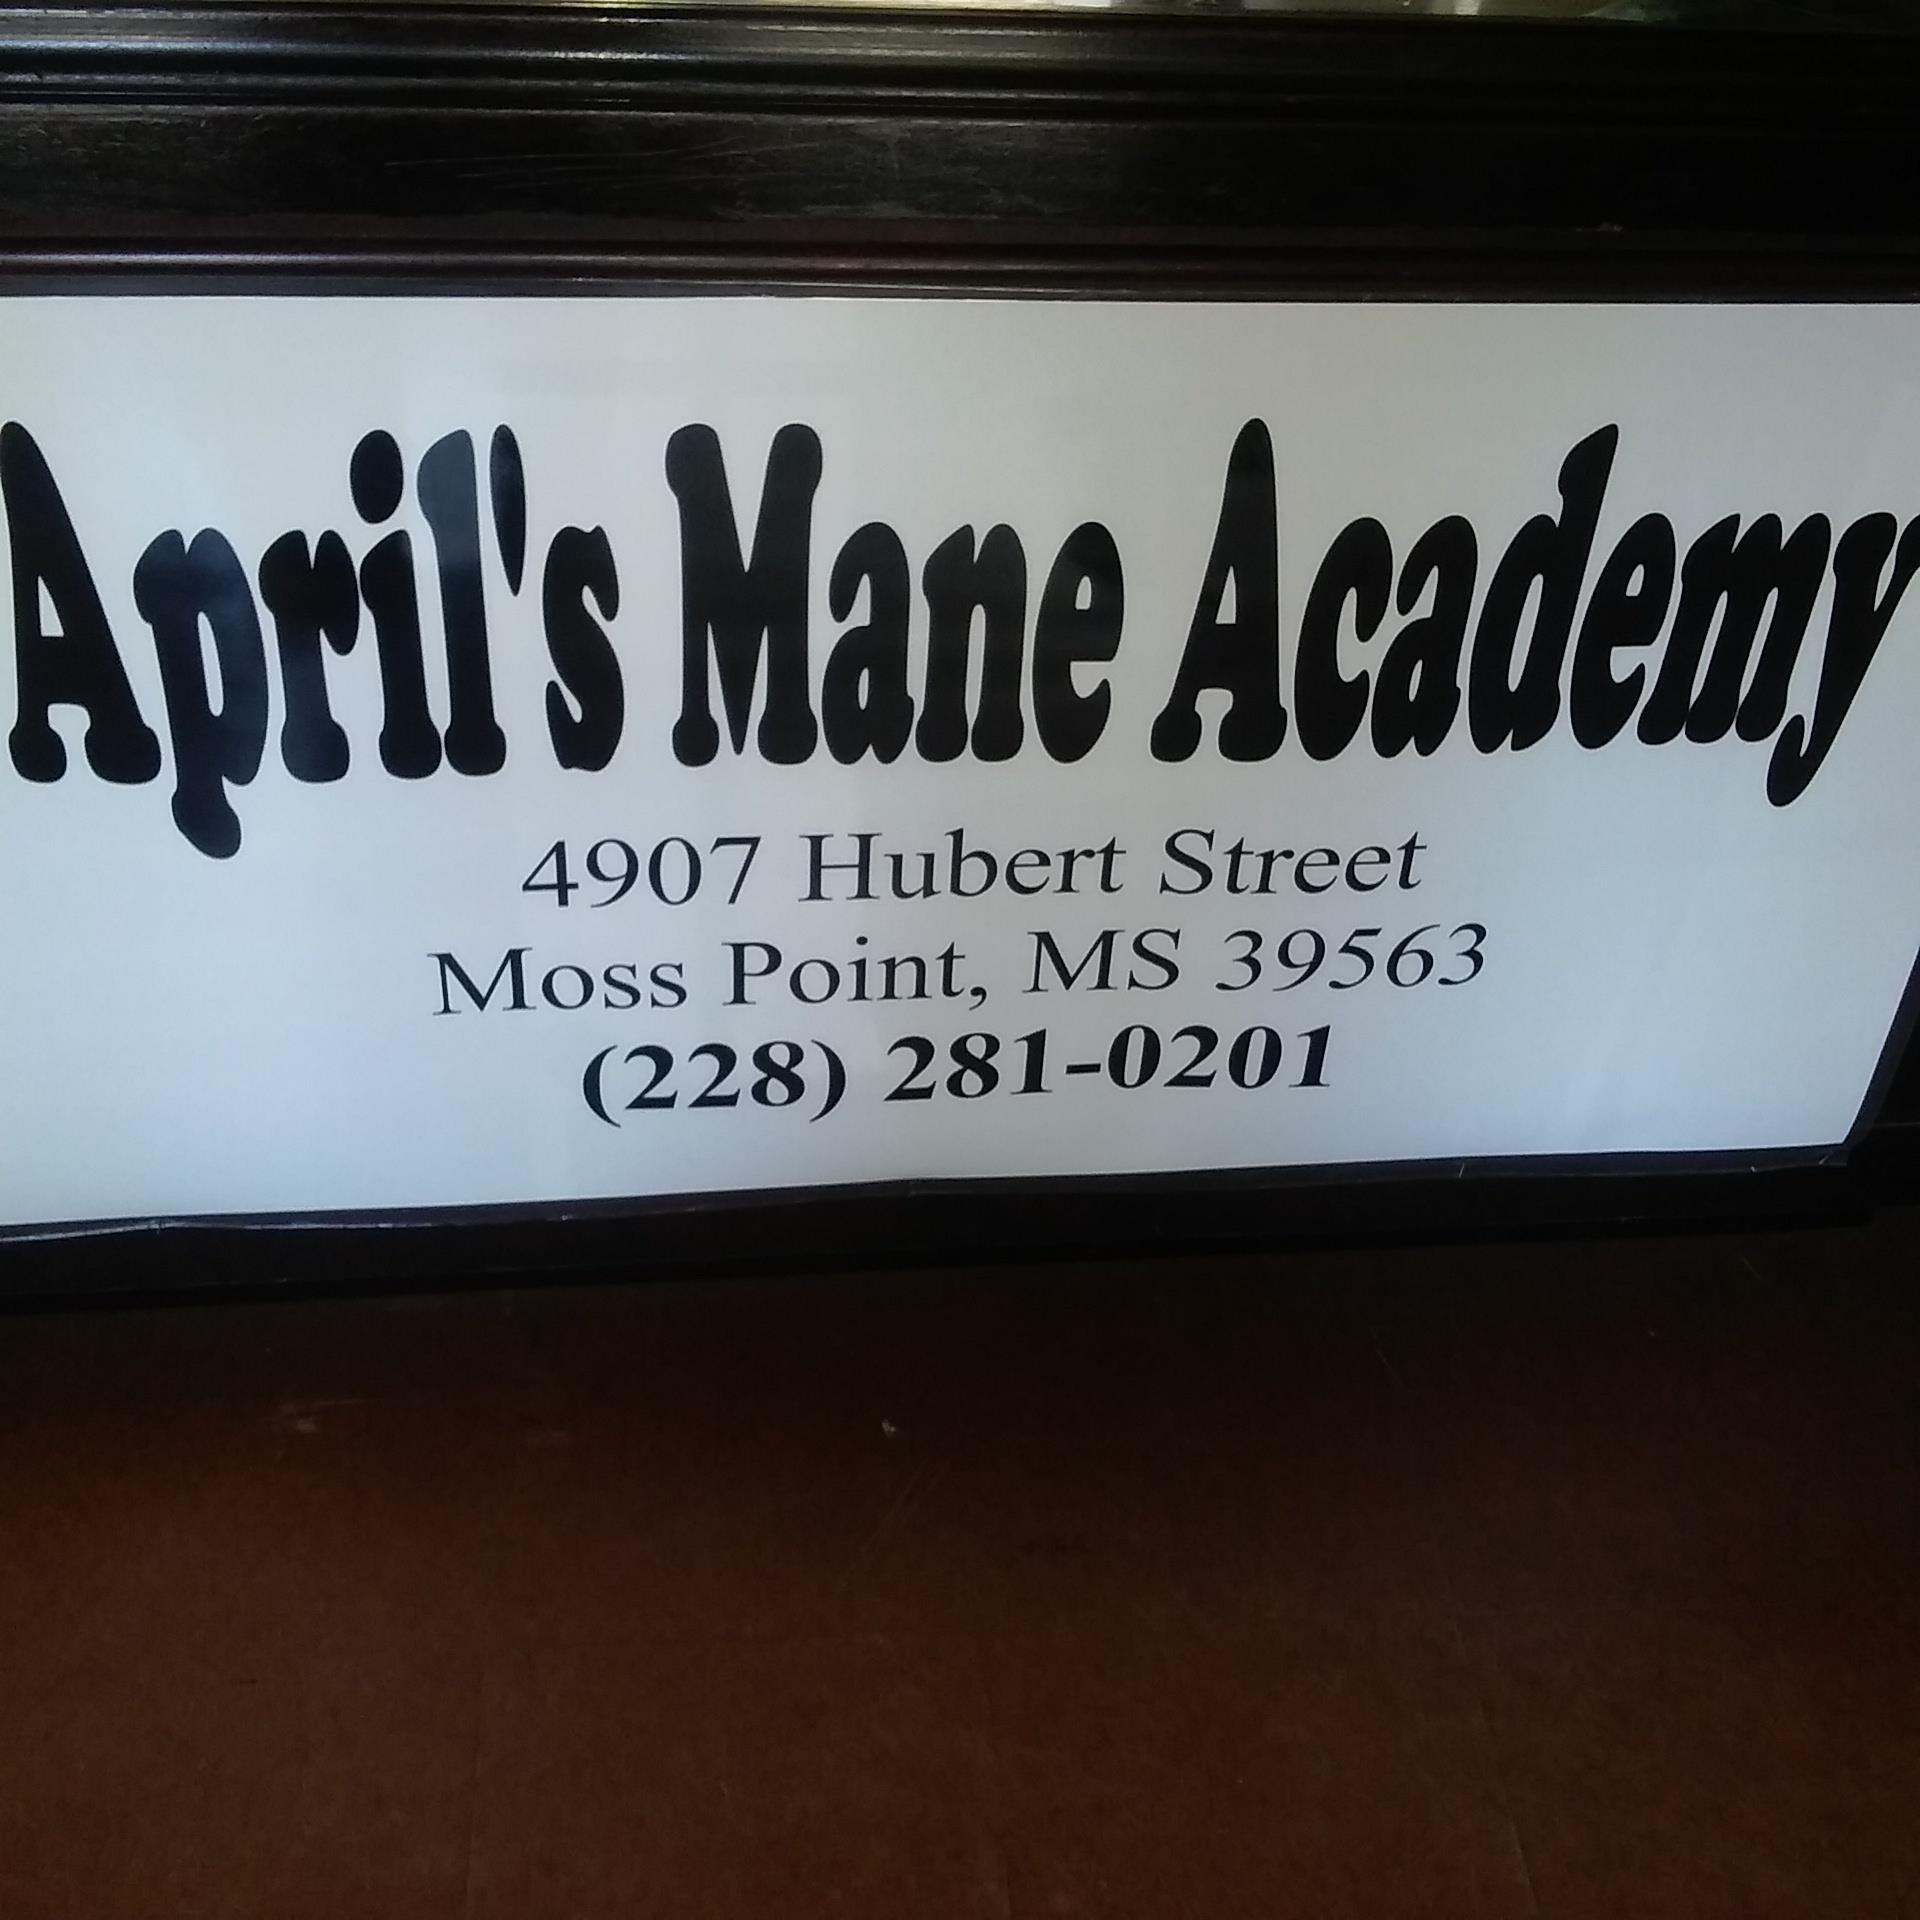 Aprils Mane Academy 4907 Hubert St, Moss Point Mississippi 39563